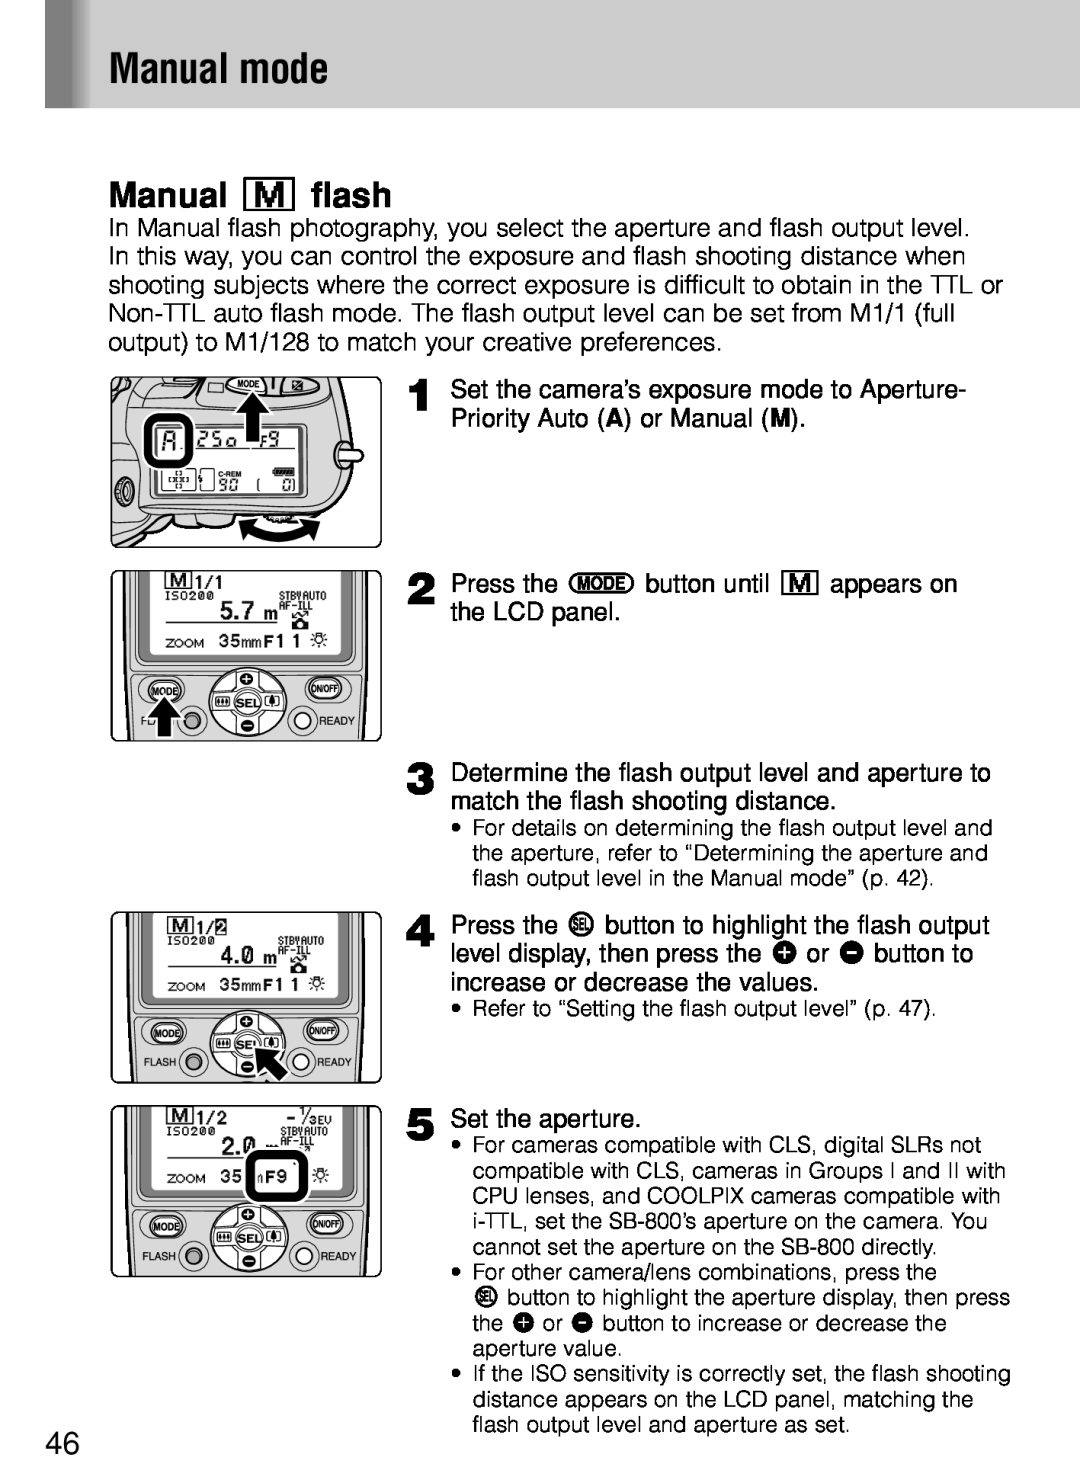 Nikon SB-800 instruction manual Manual G flash, Manual mode 